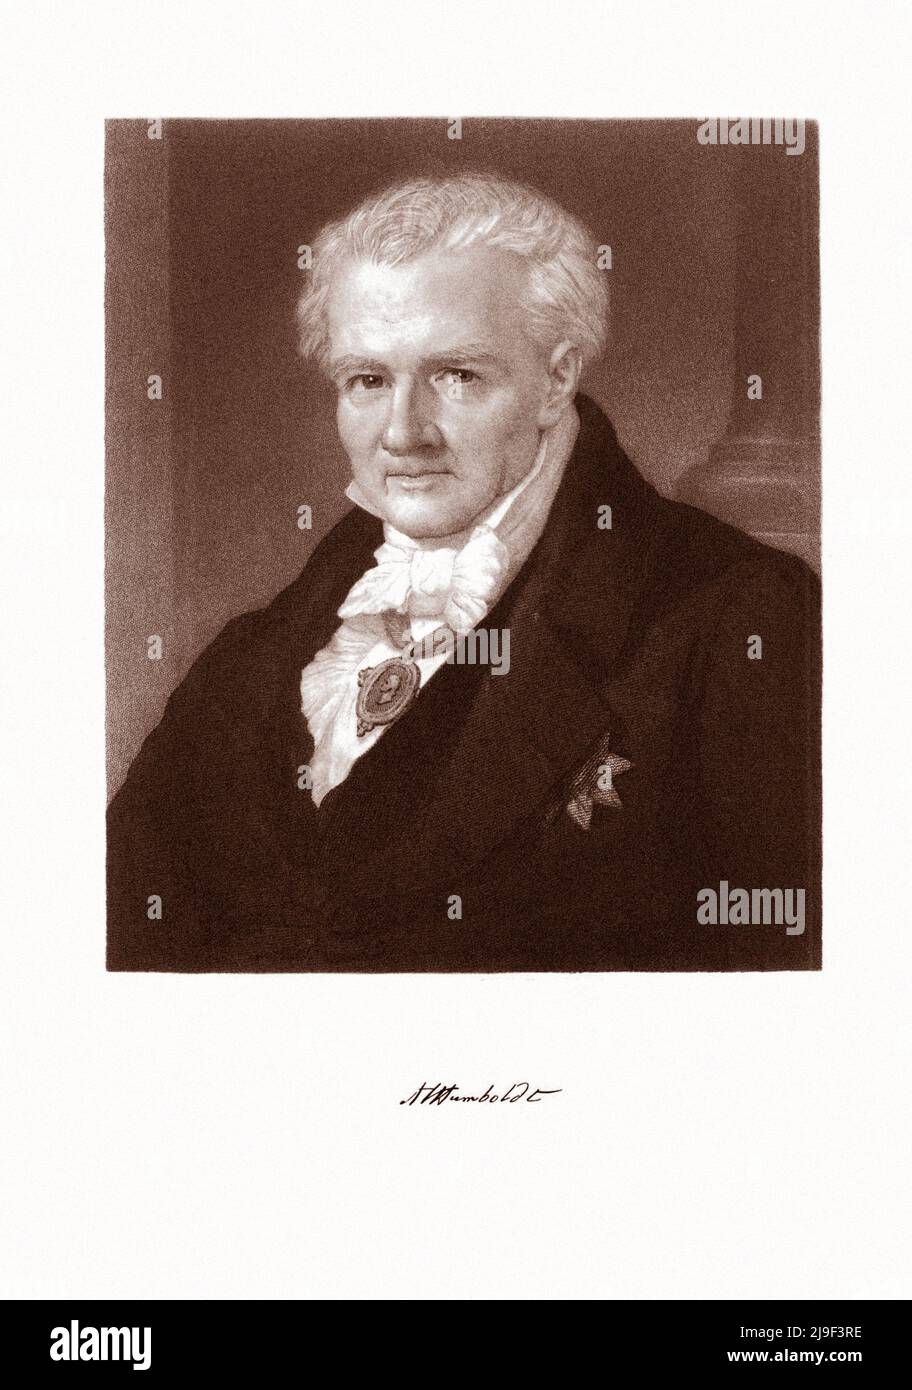 Ritratto di Alexander von Humboldt. Incisione di John Sartain, 1808-1897. Dopo Hildebrandt. Friedrich Wilhelm Heinrich Alexander von Humboldt (1769– Foto Stock